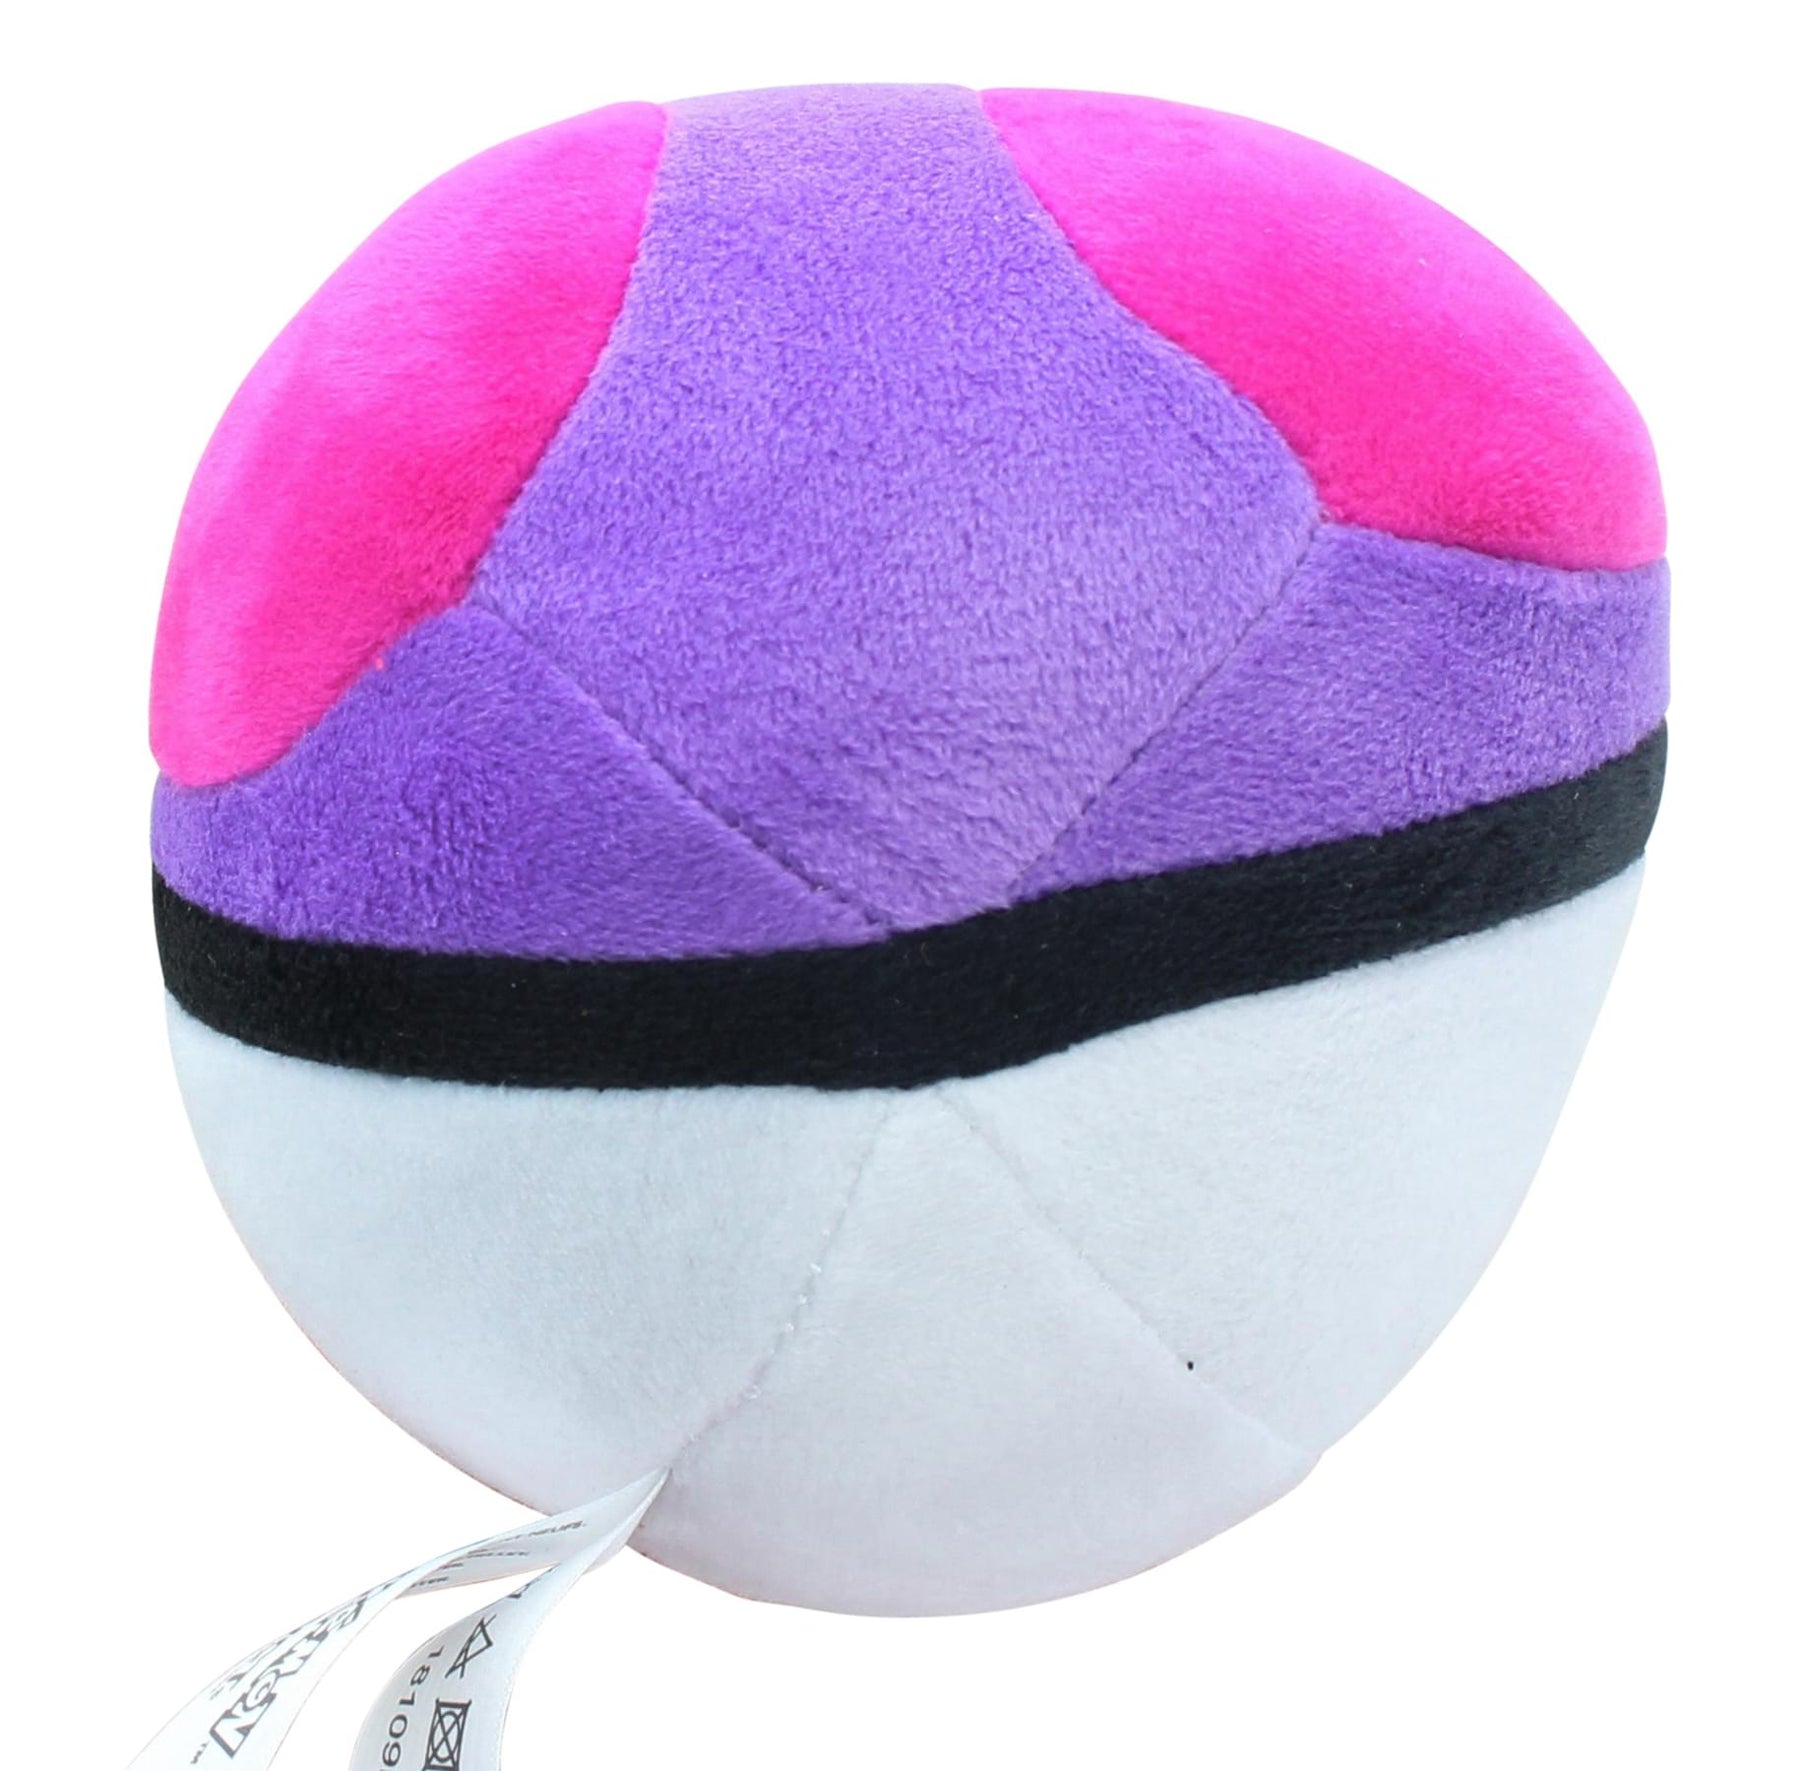 Pokemon 5 Inch Plush Poke Ball | Master Ball